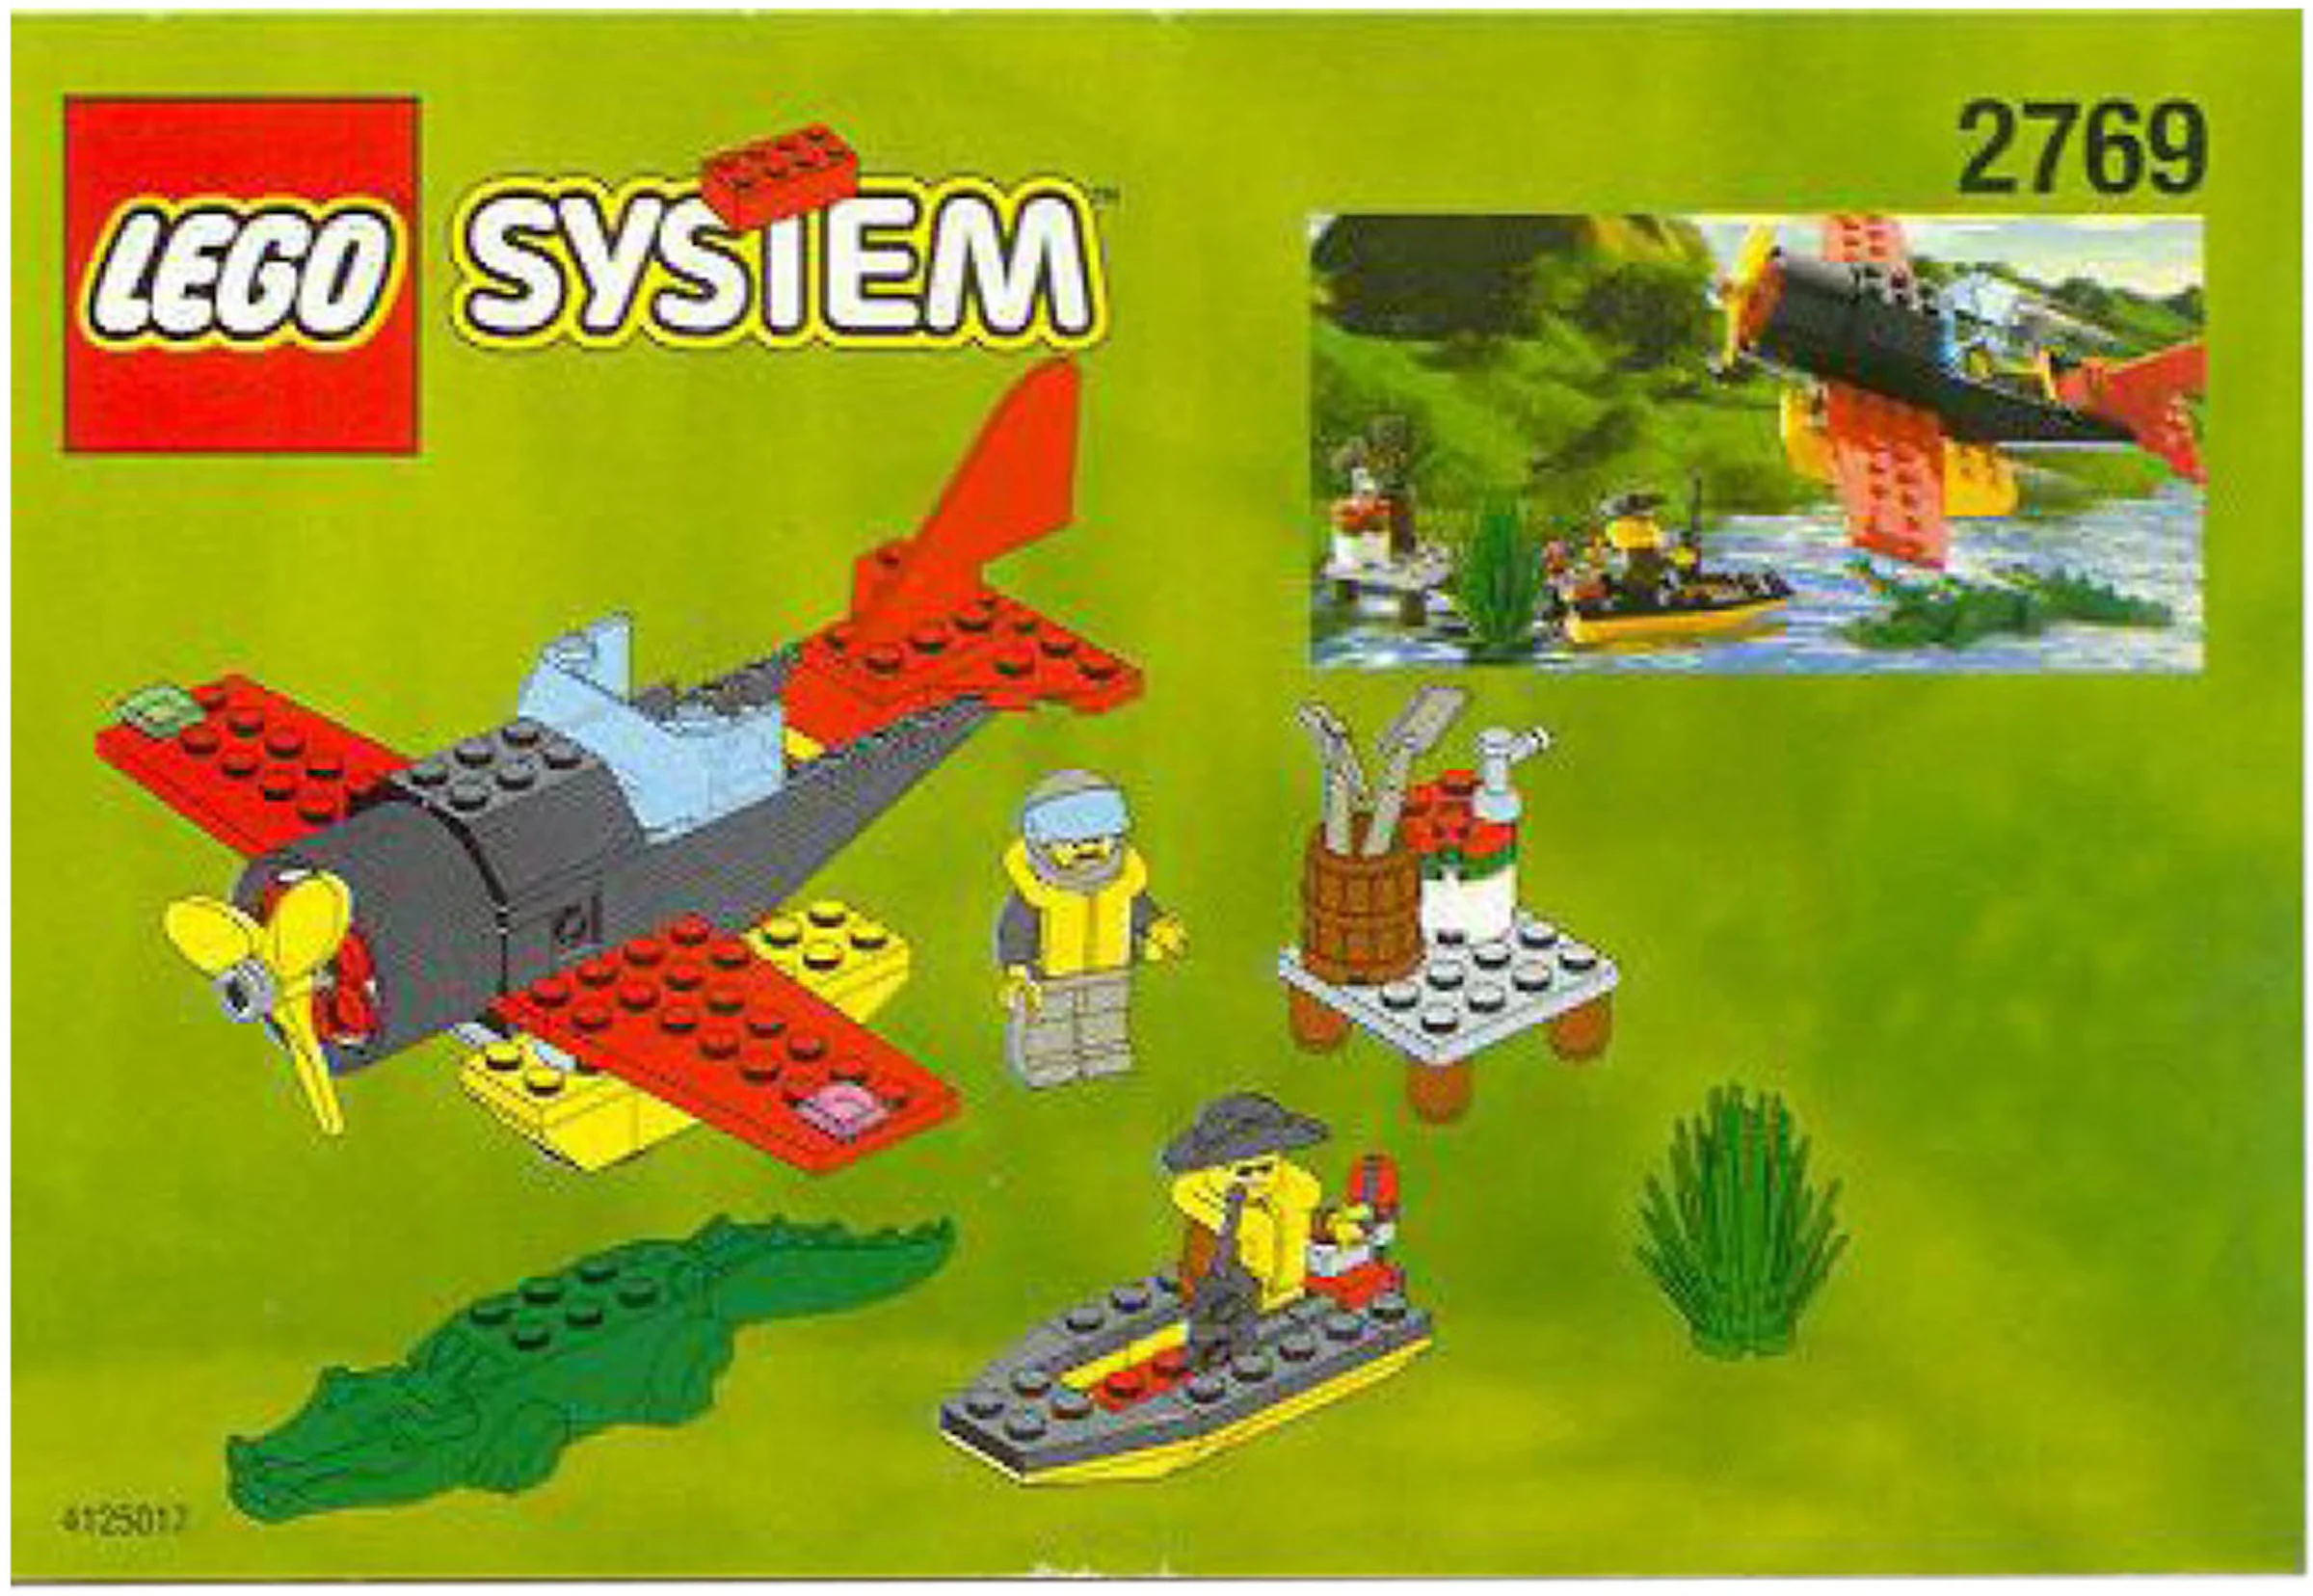 LEGO System Aircraft & Boat Set 2769 - US